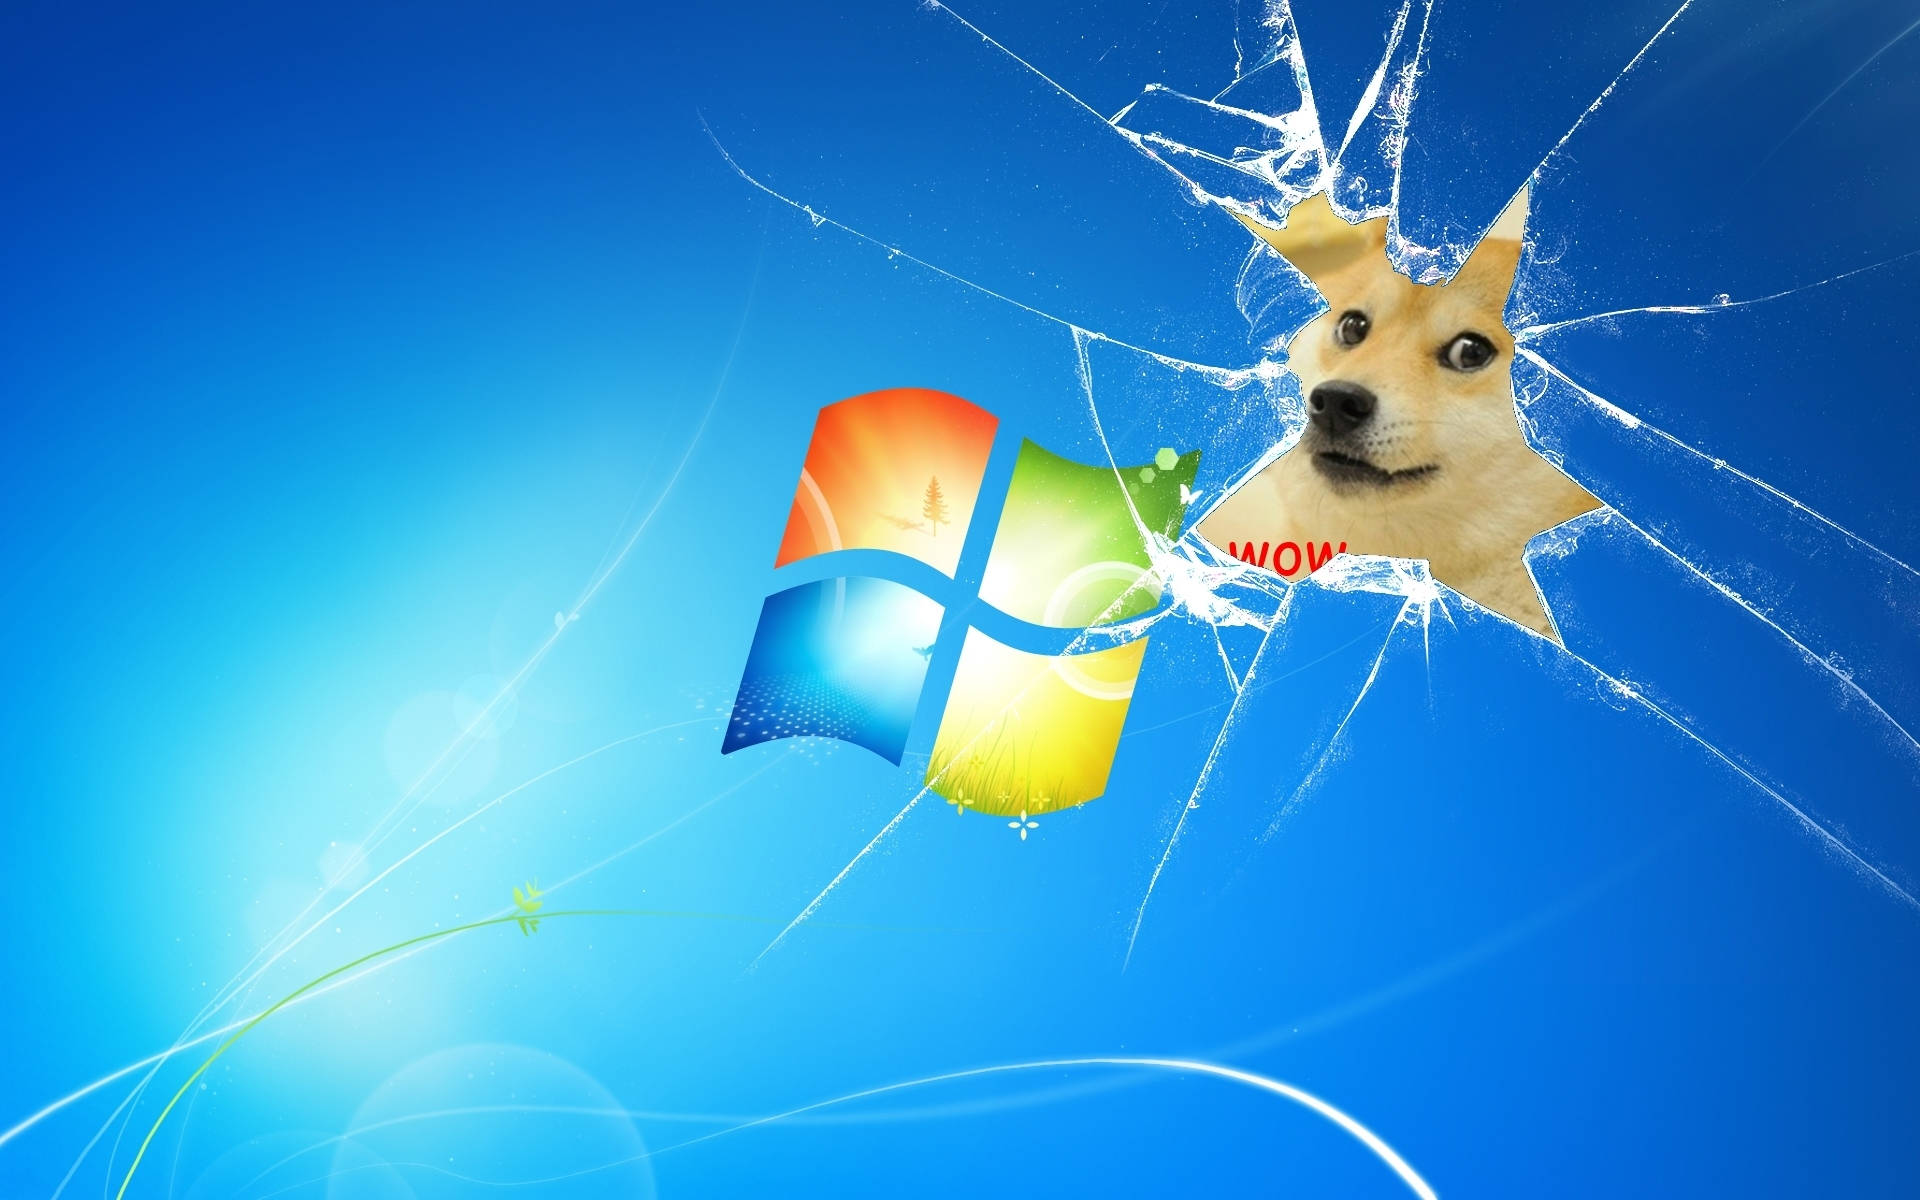 Free Doge Meme Wallpaper Downloads, [100+] Doge Meme Wallpapers for FREE |  